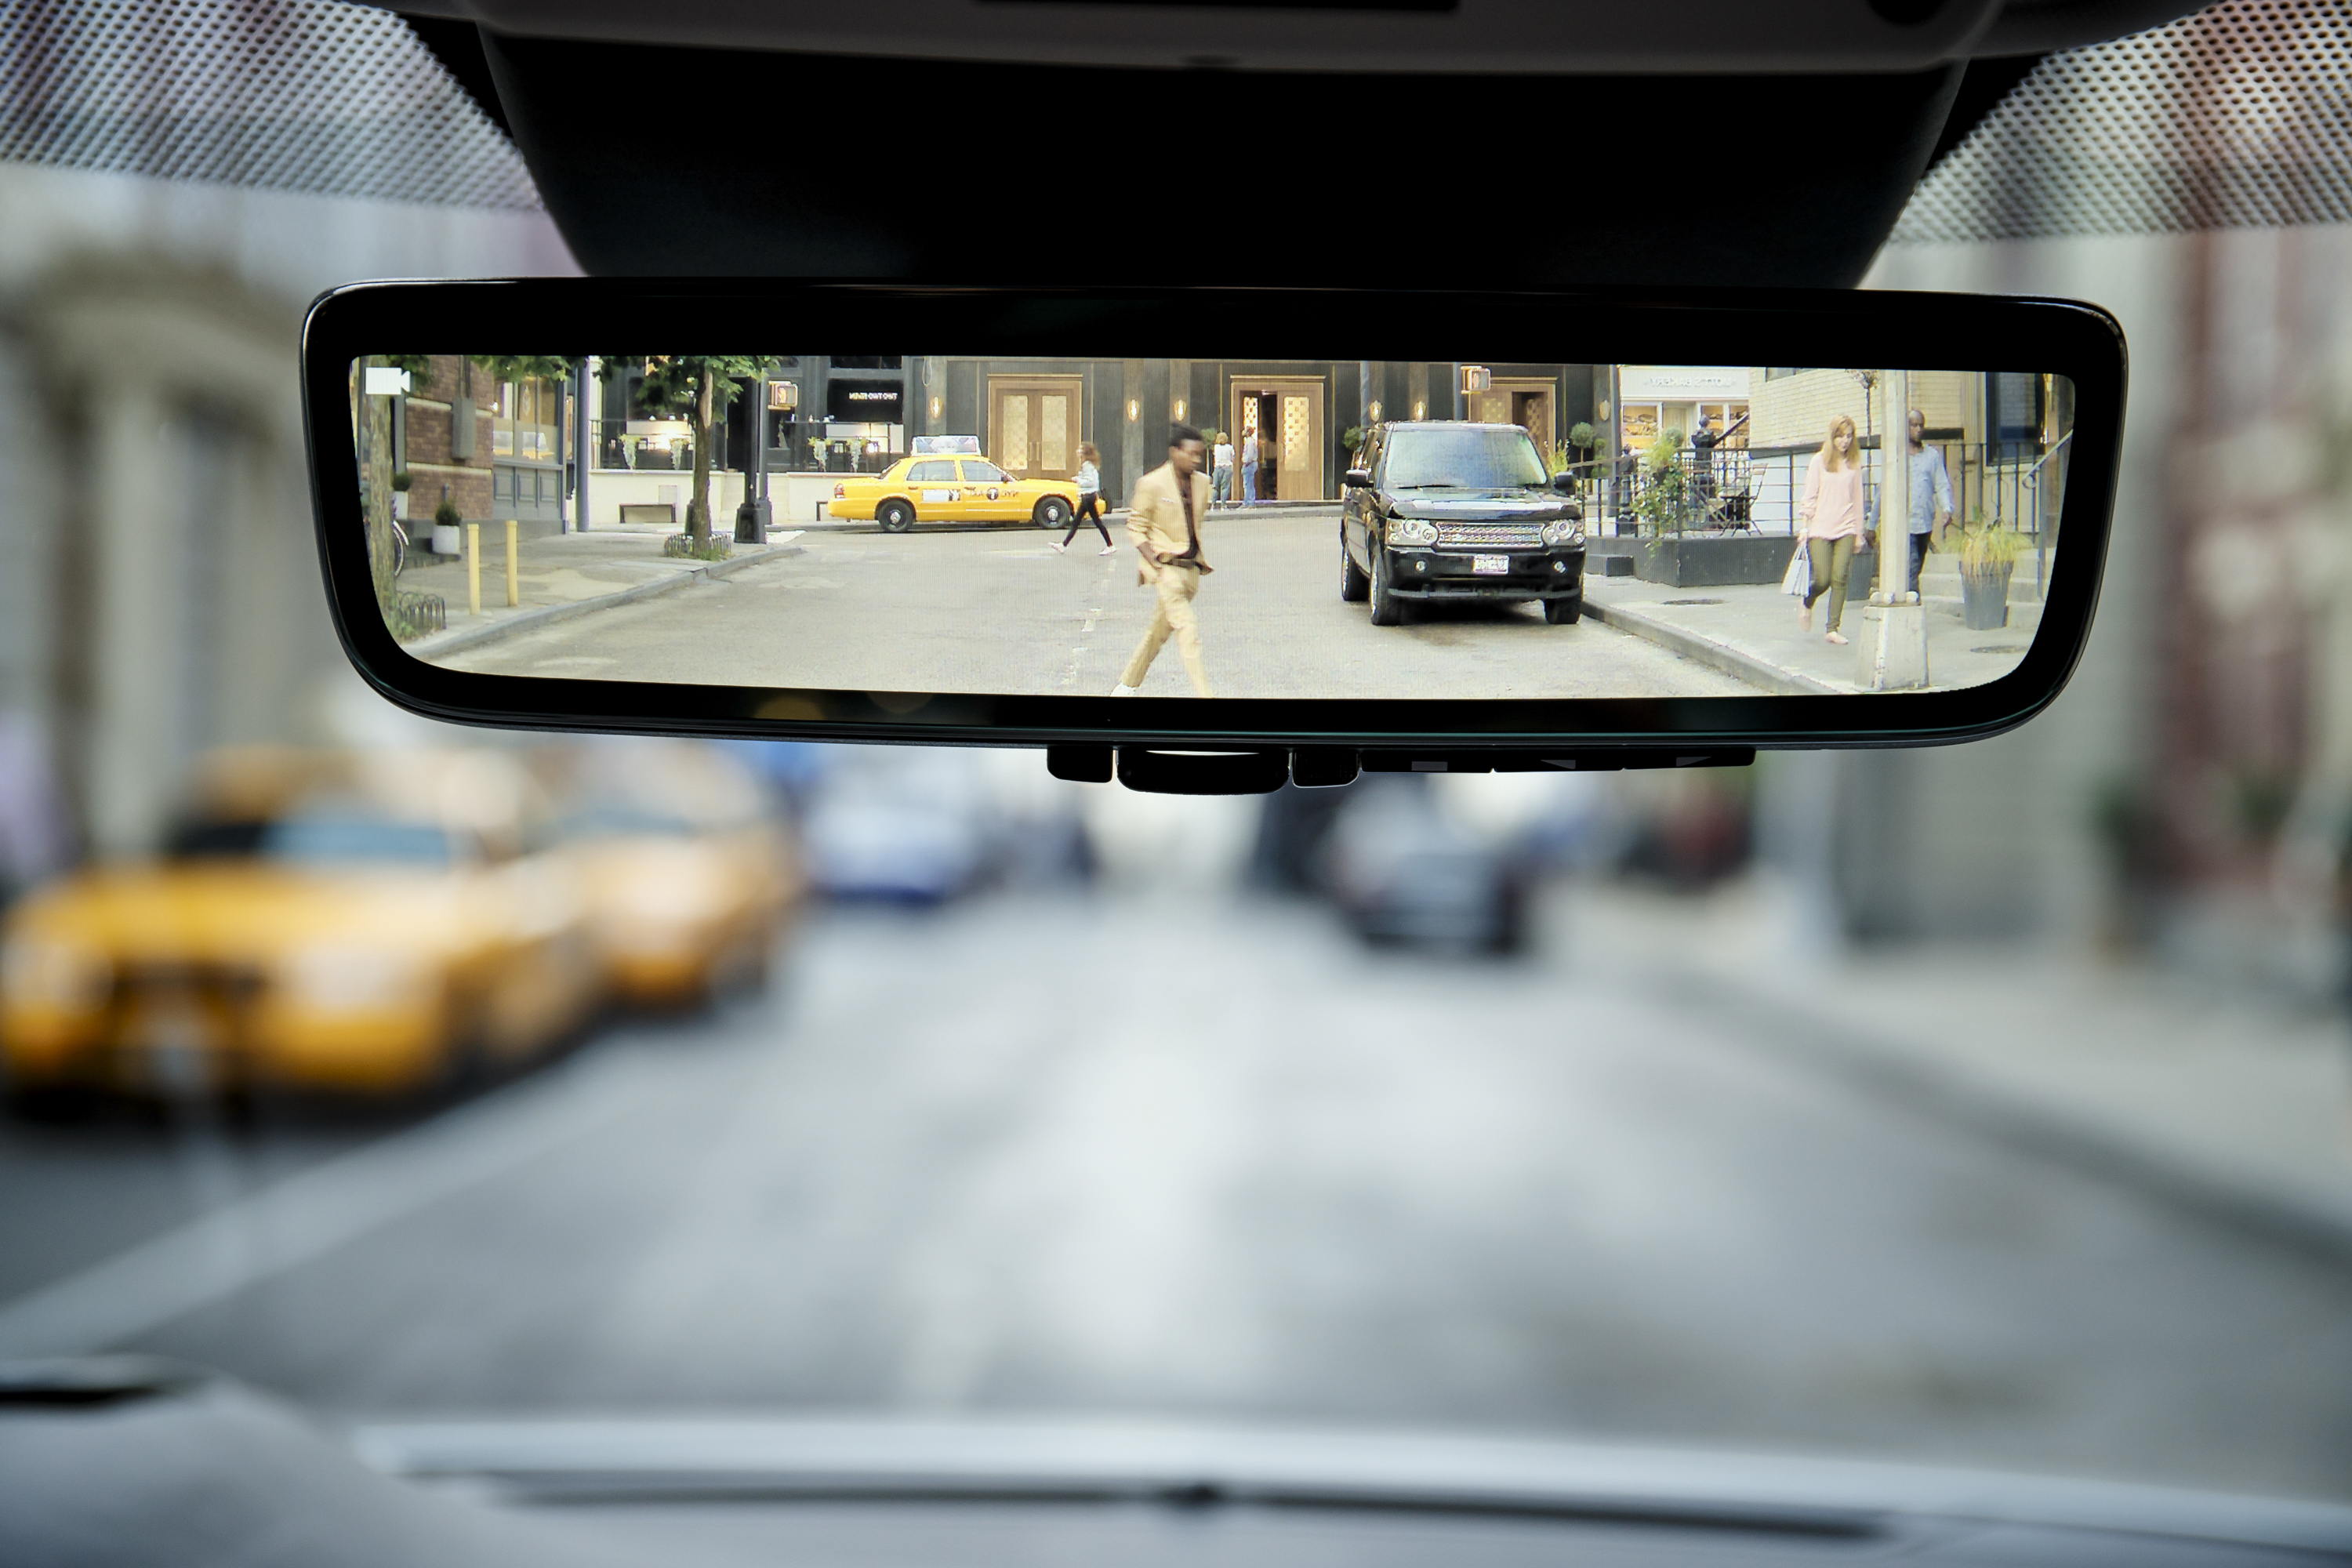 2020 Range Rover Evoque Digital Rear View Mirror Wallpapers #146 of 150